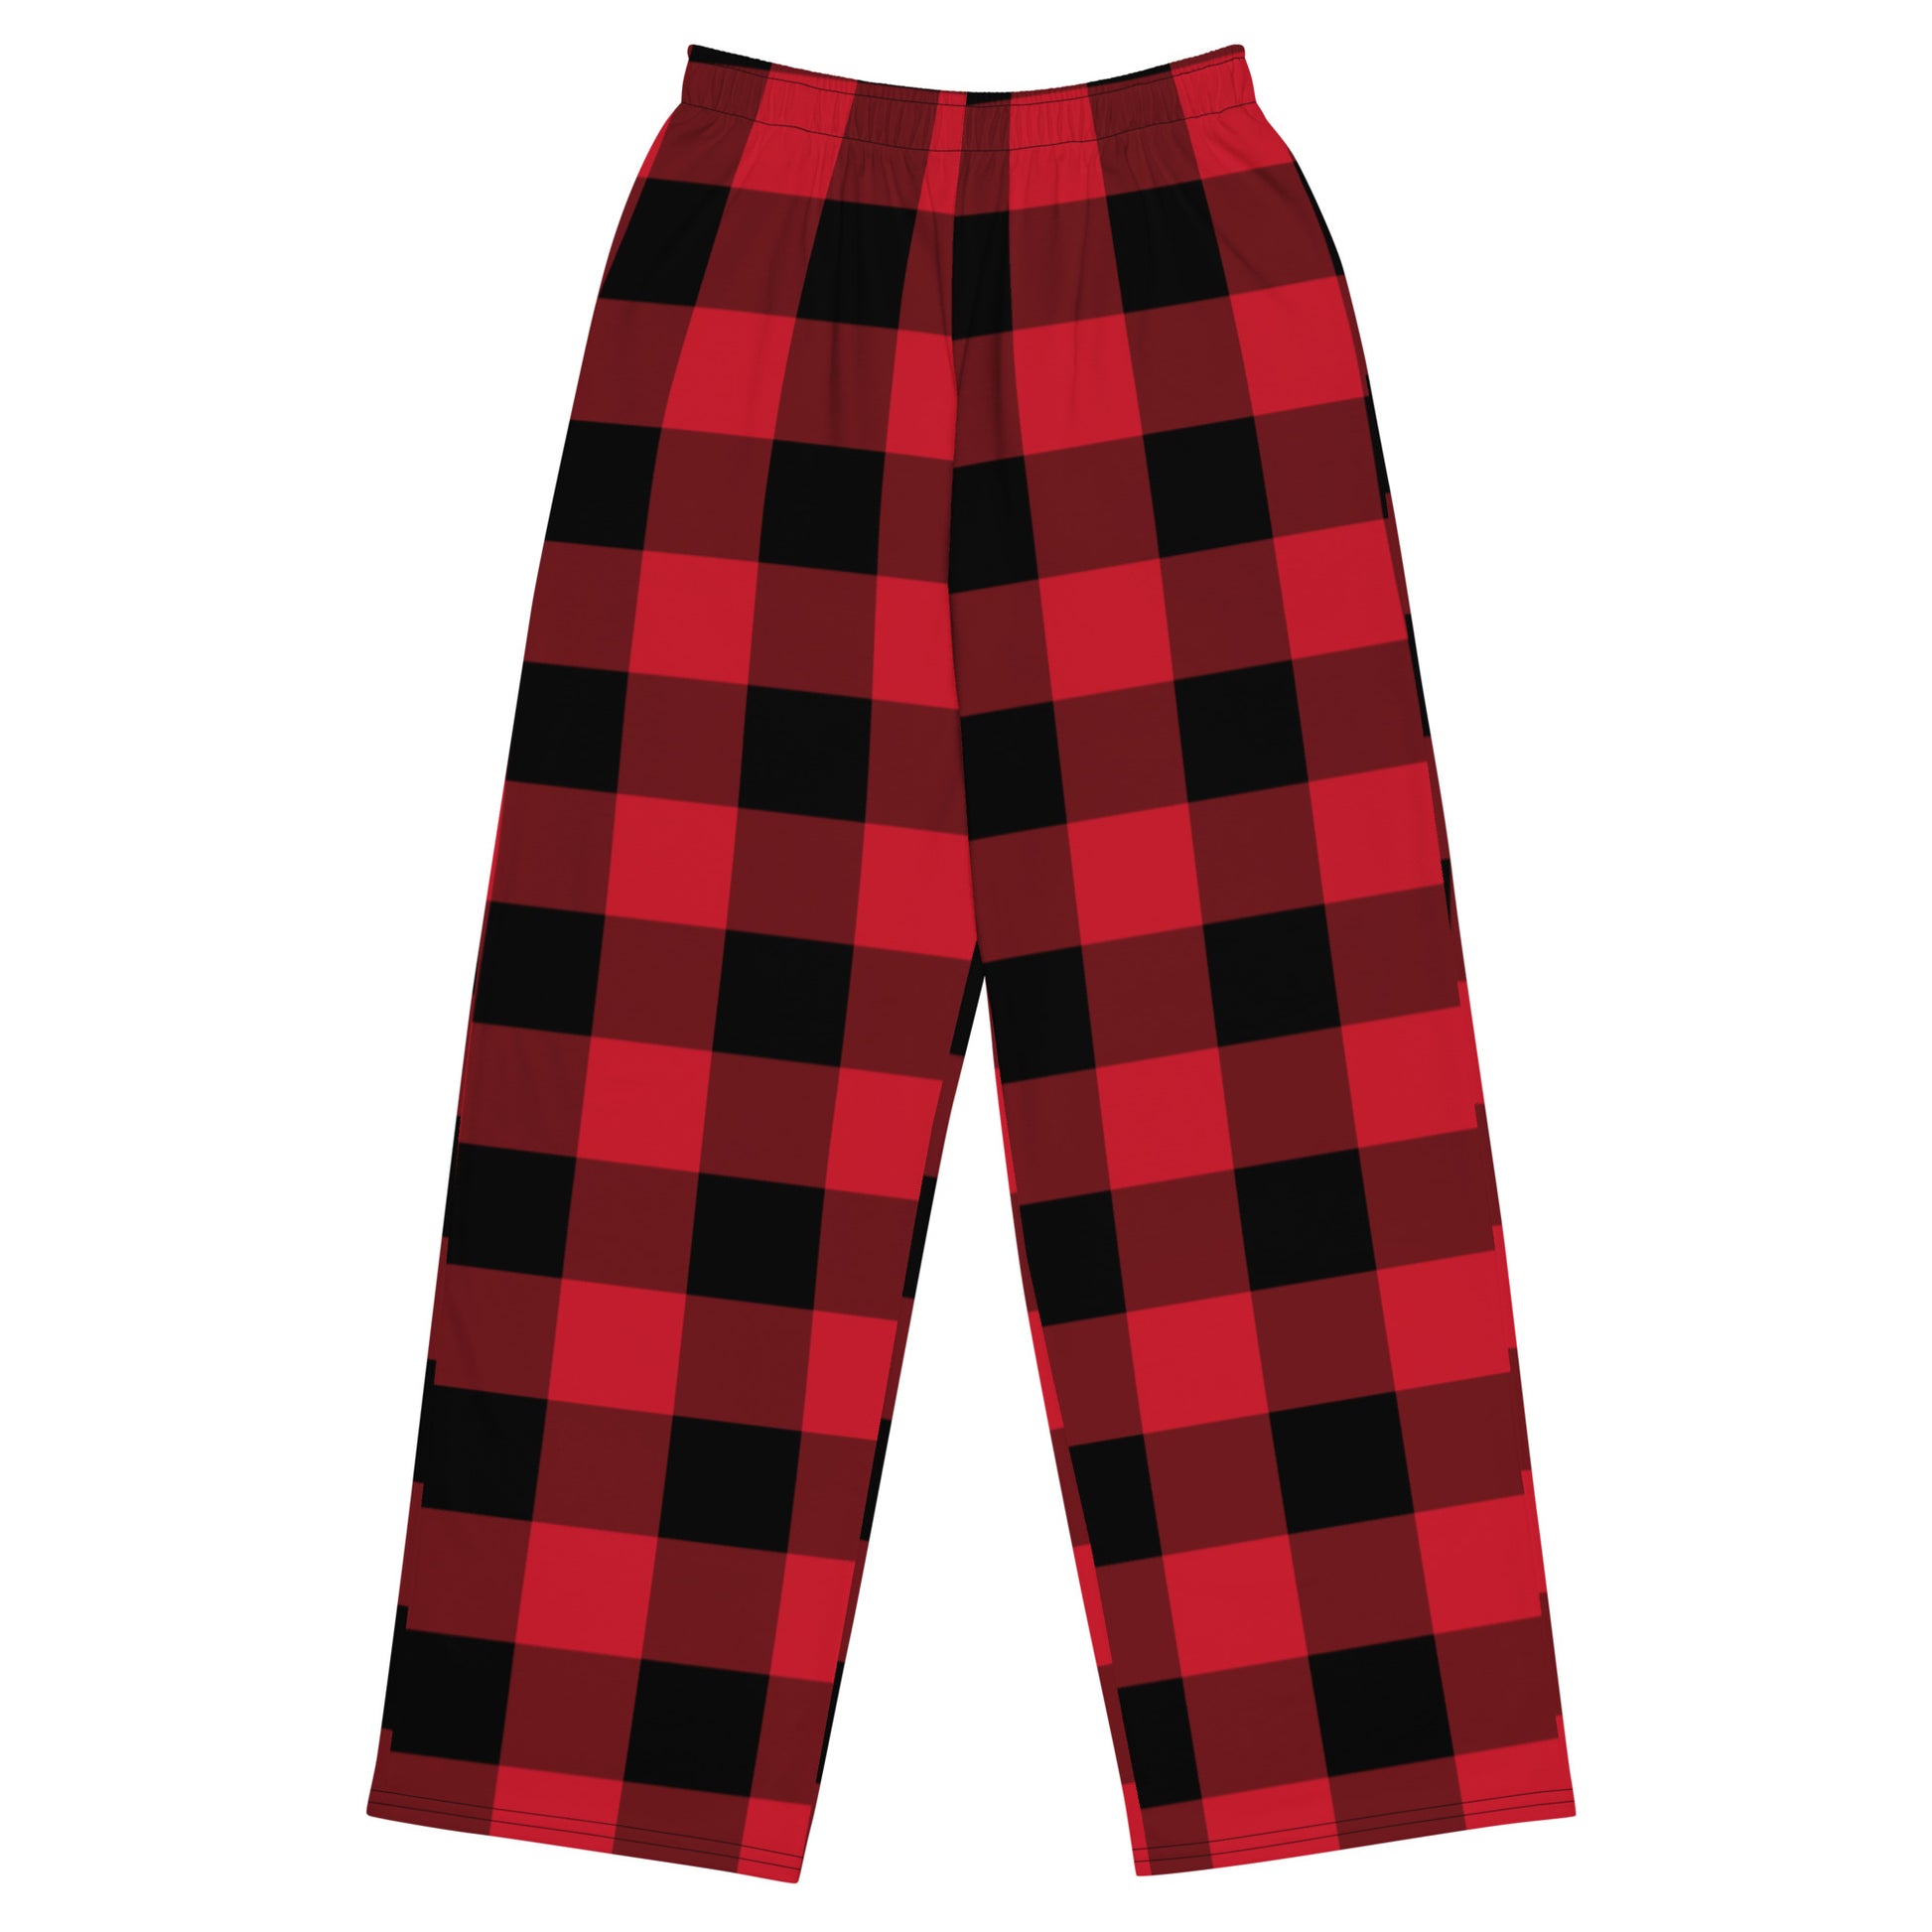 Unisex Pocket Pajama Bottom Red White Black Plaid Cotton Christmas